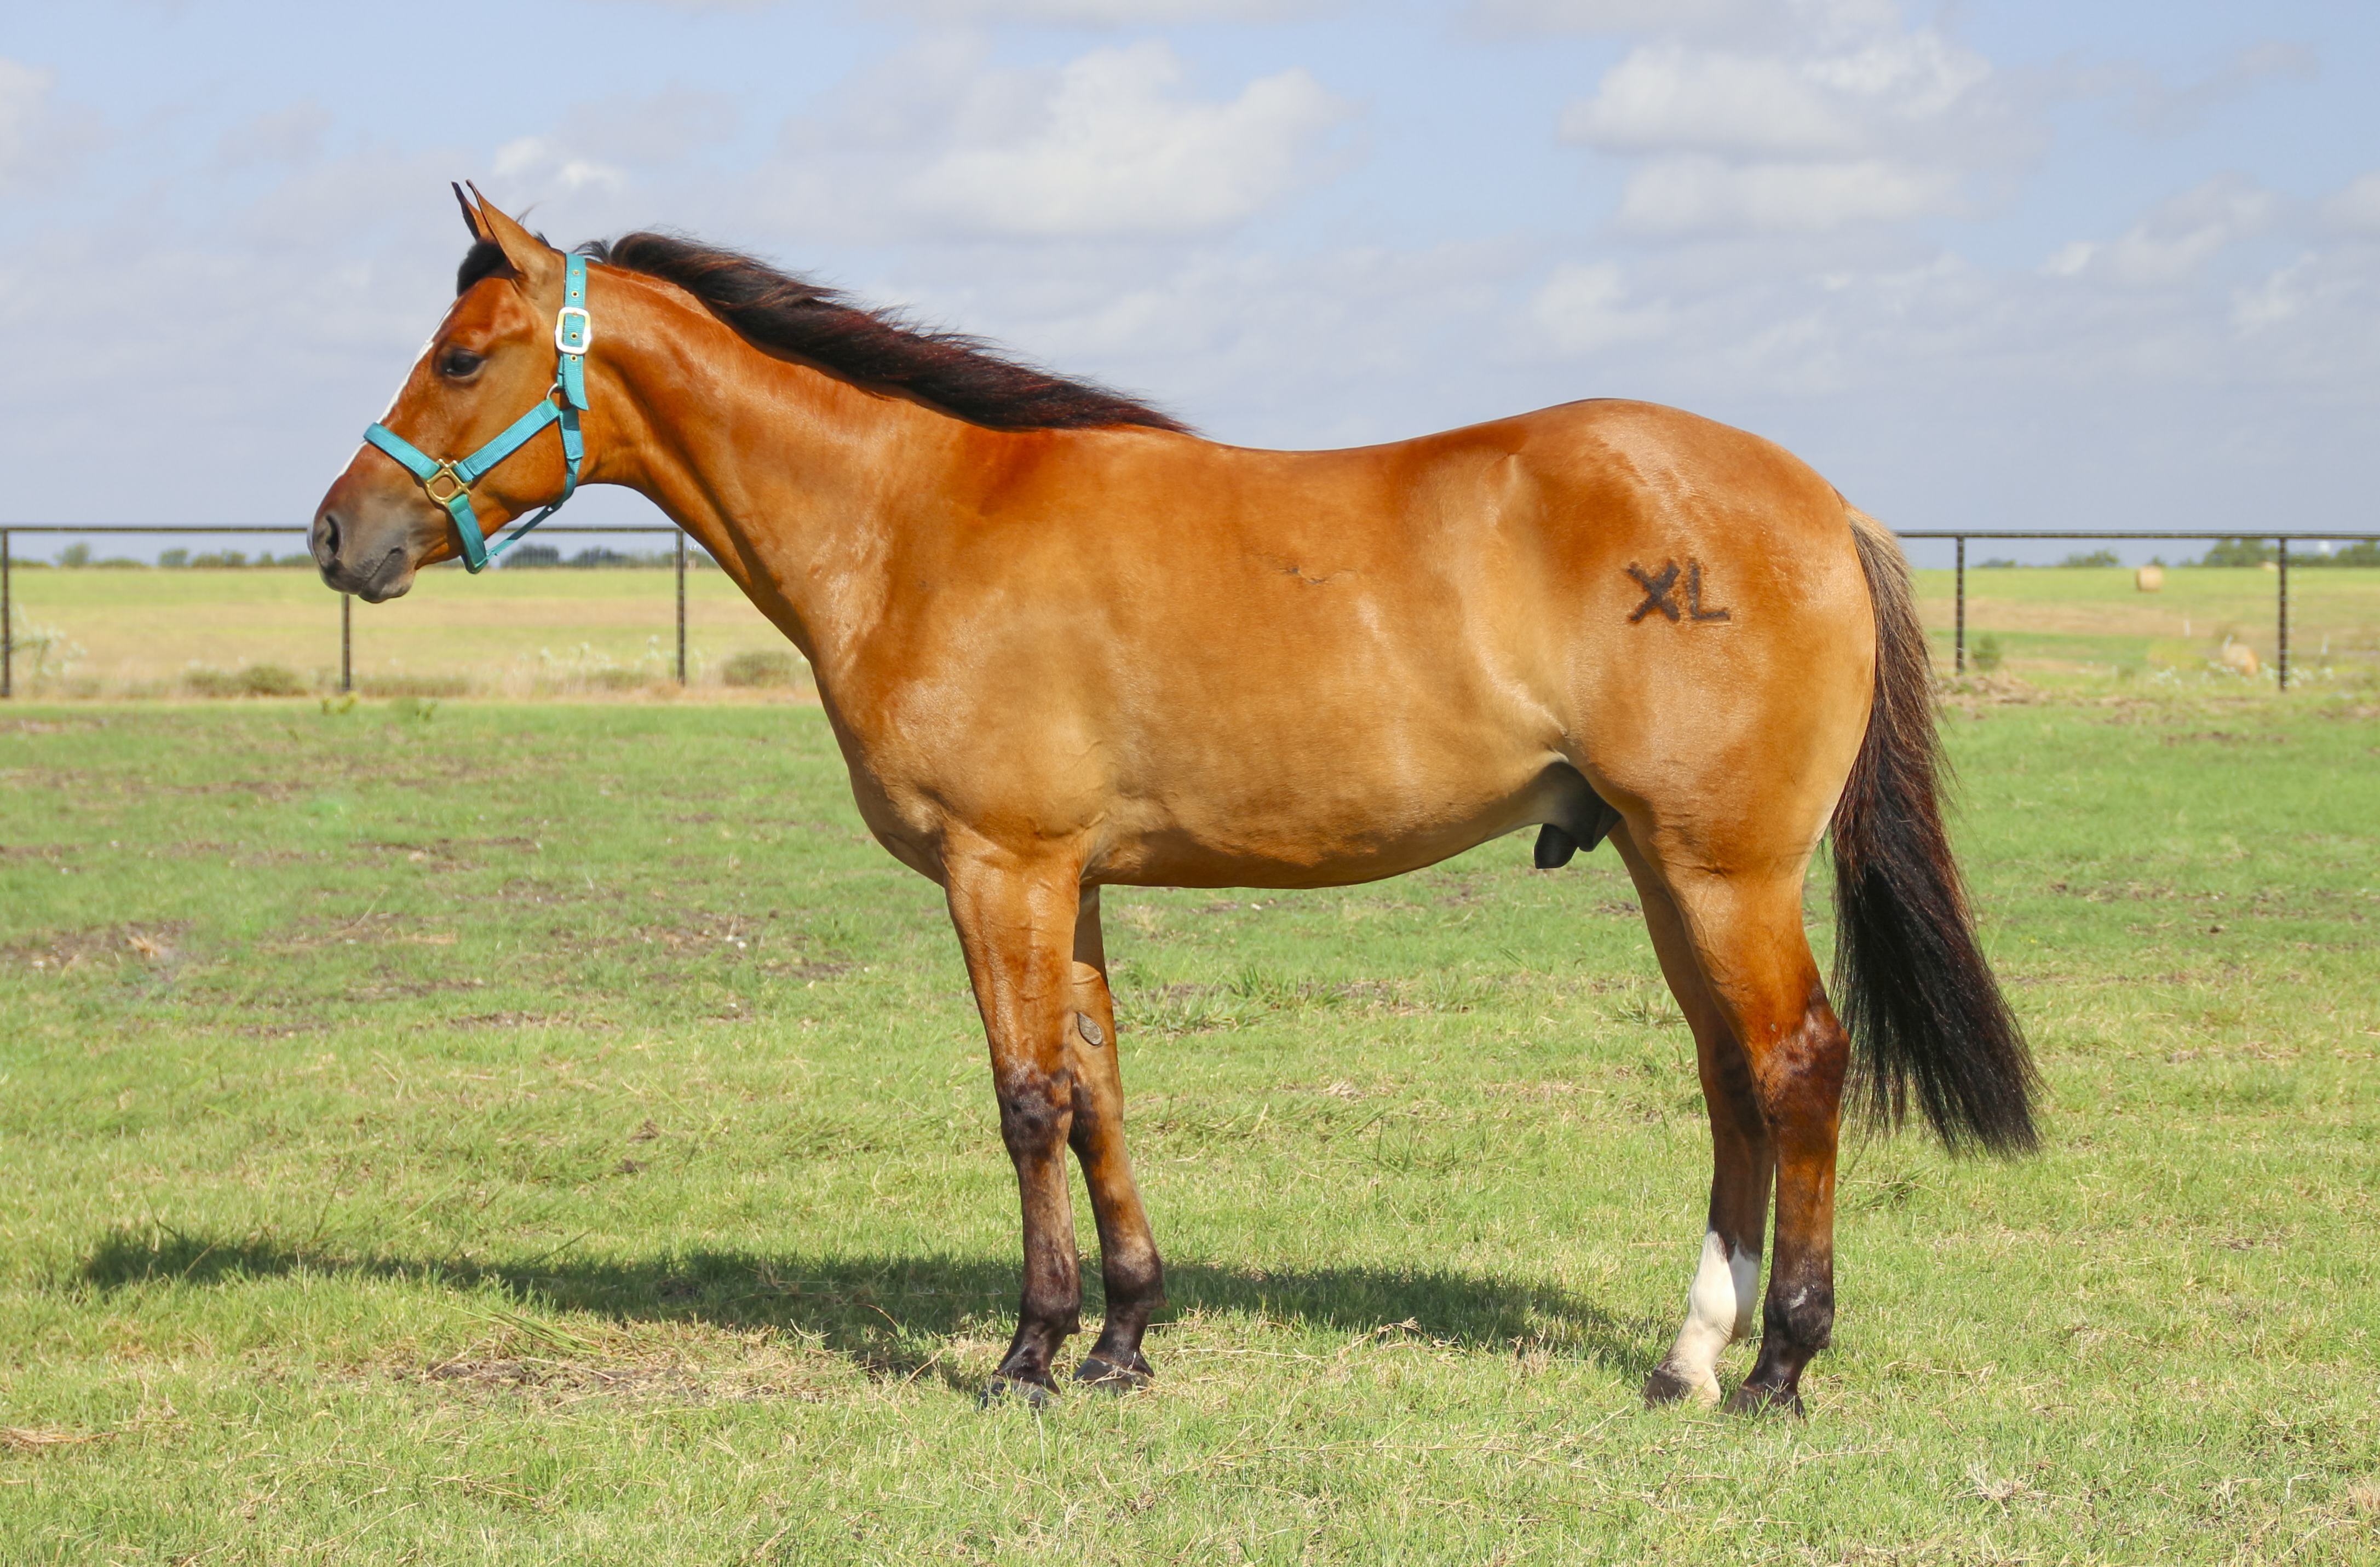 File:American Quarter Horses branded XL.jpg - Wikimedia Commons